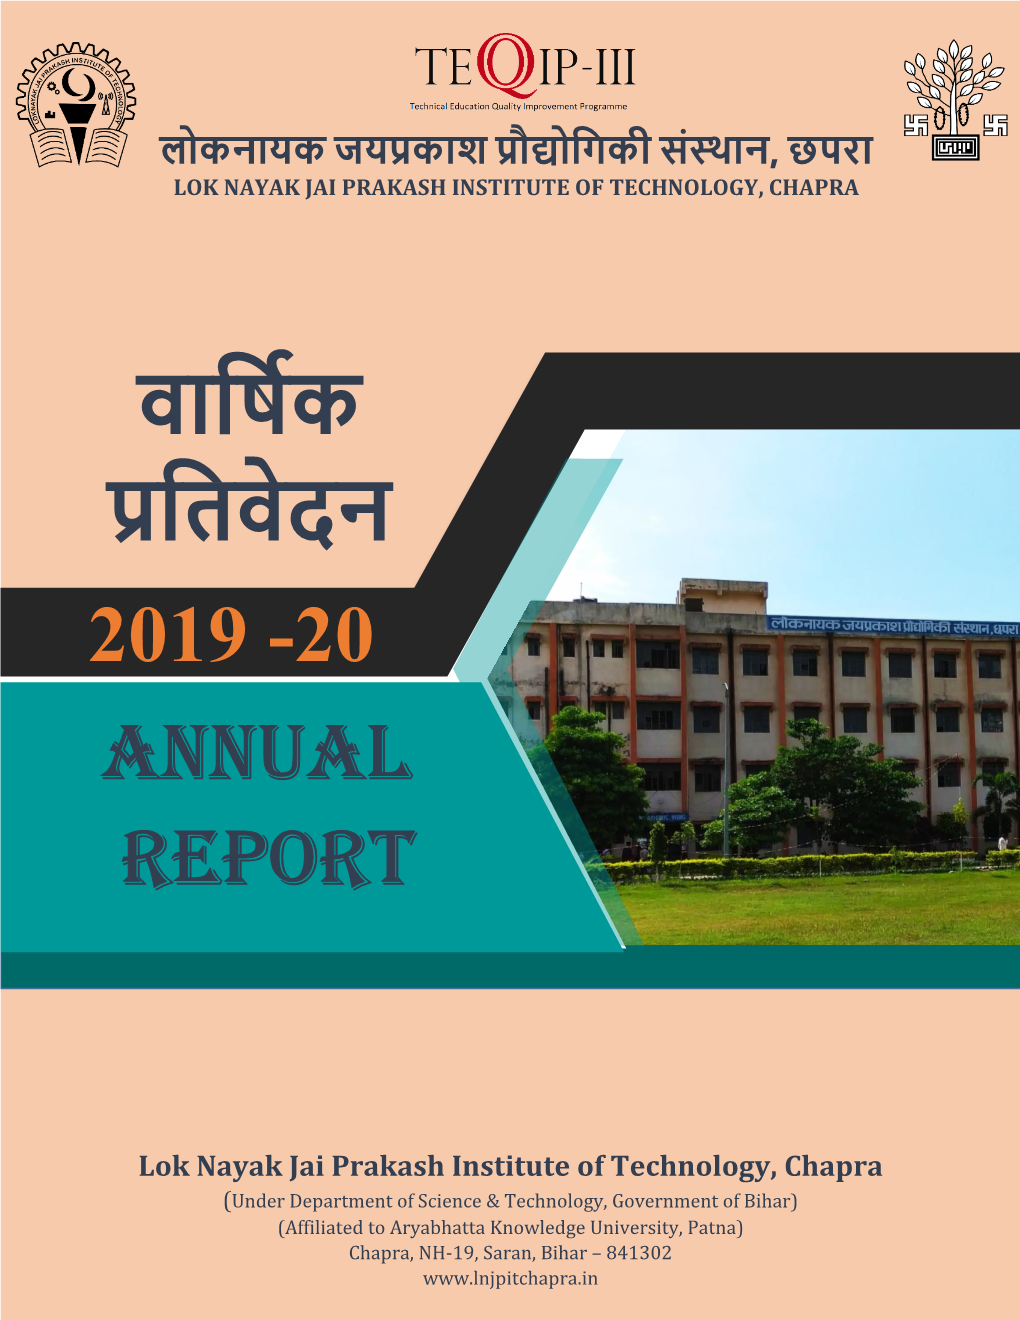 Annual Report वागषिक प्रगिवेदन 2019